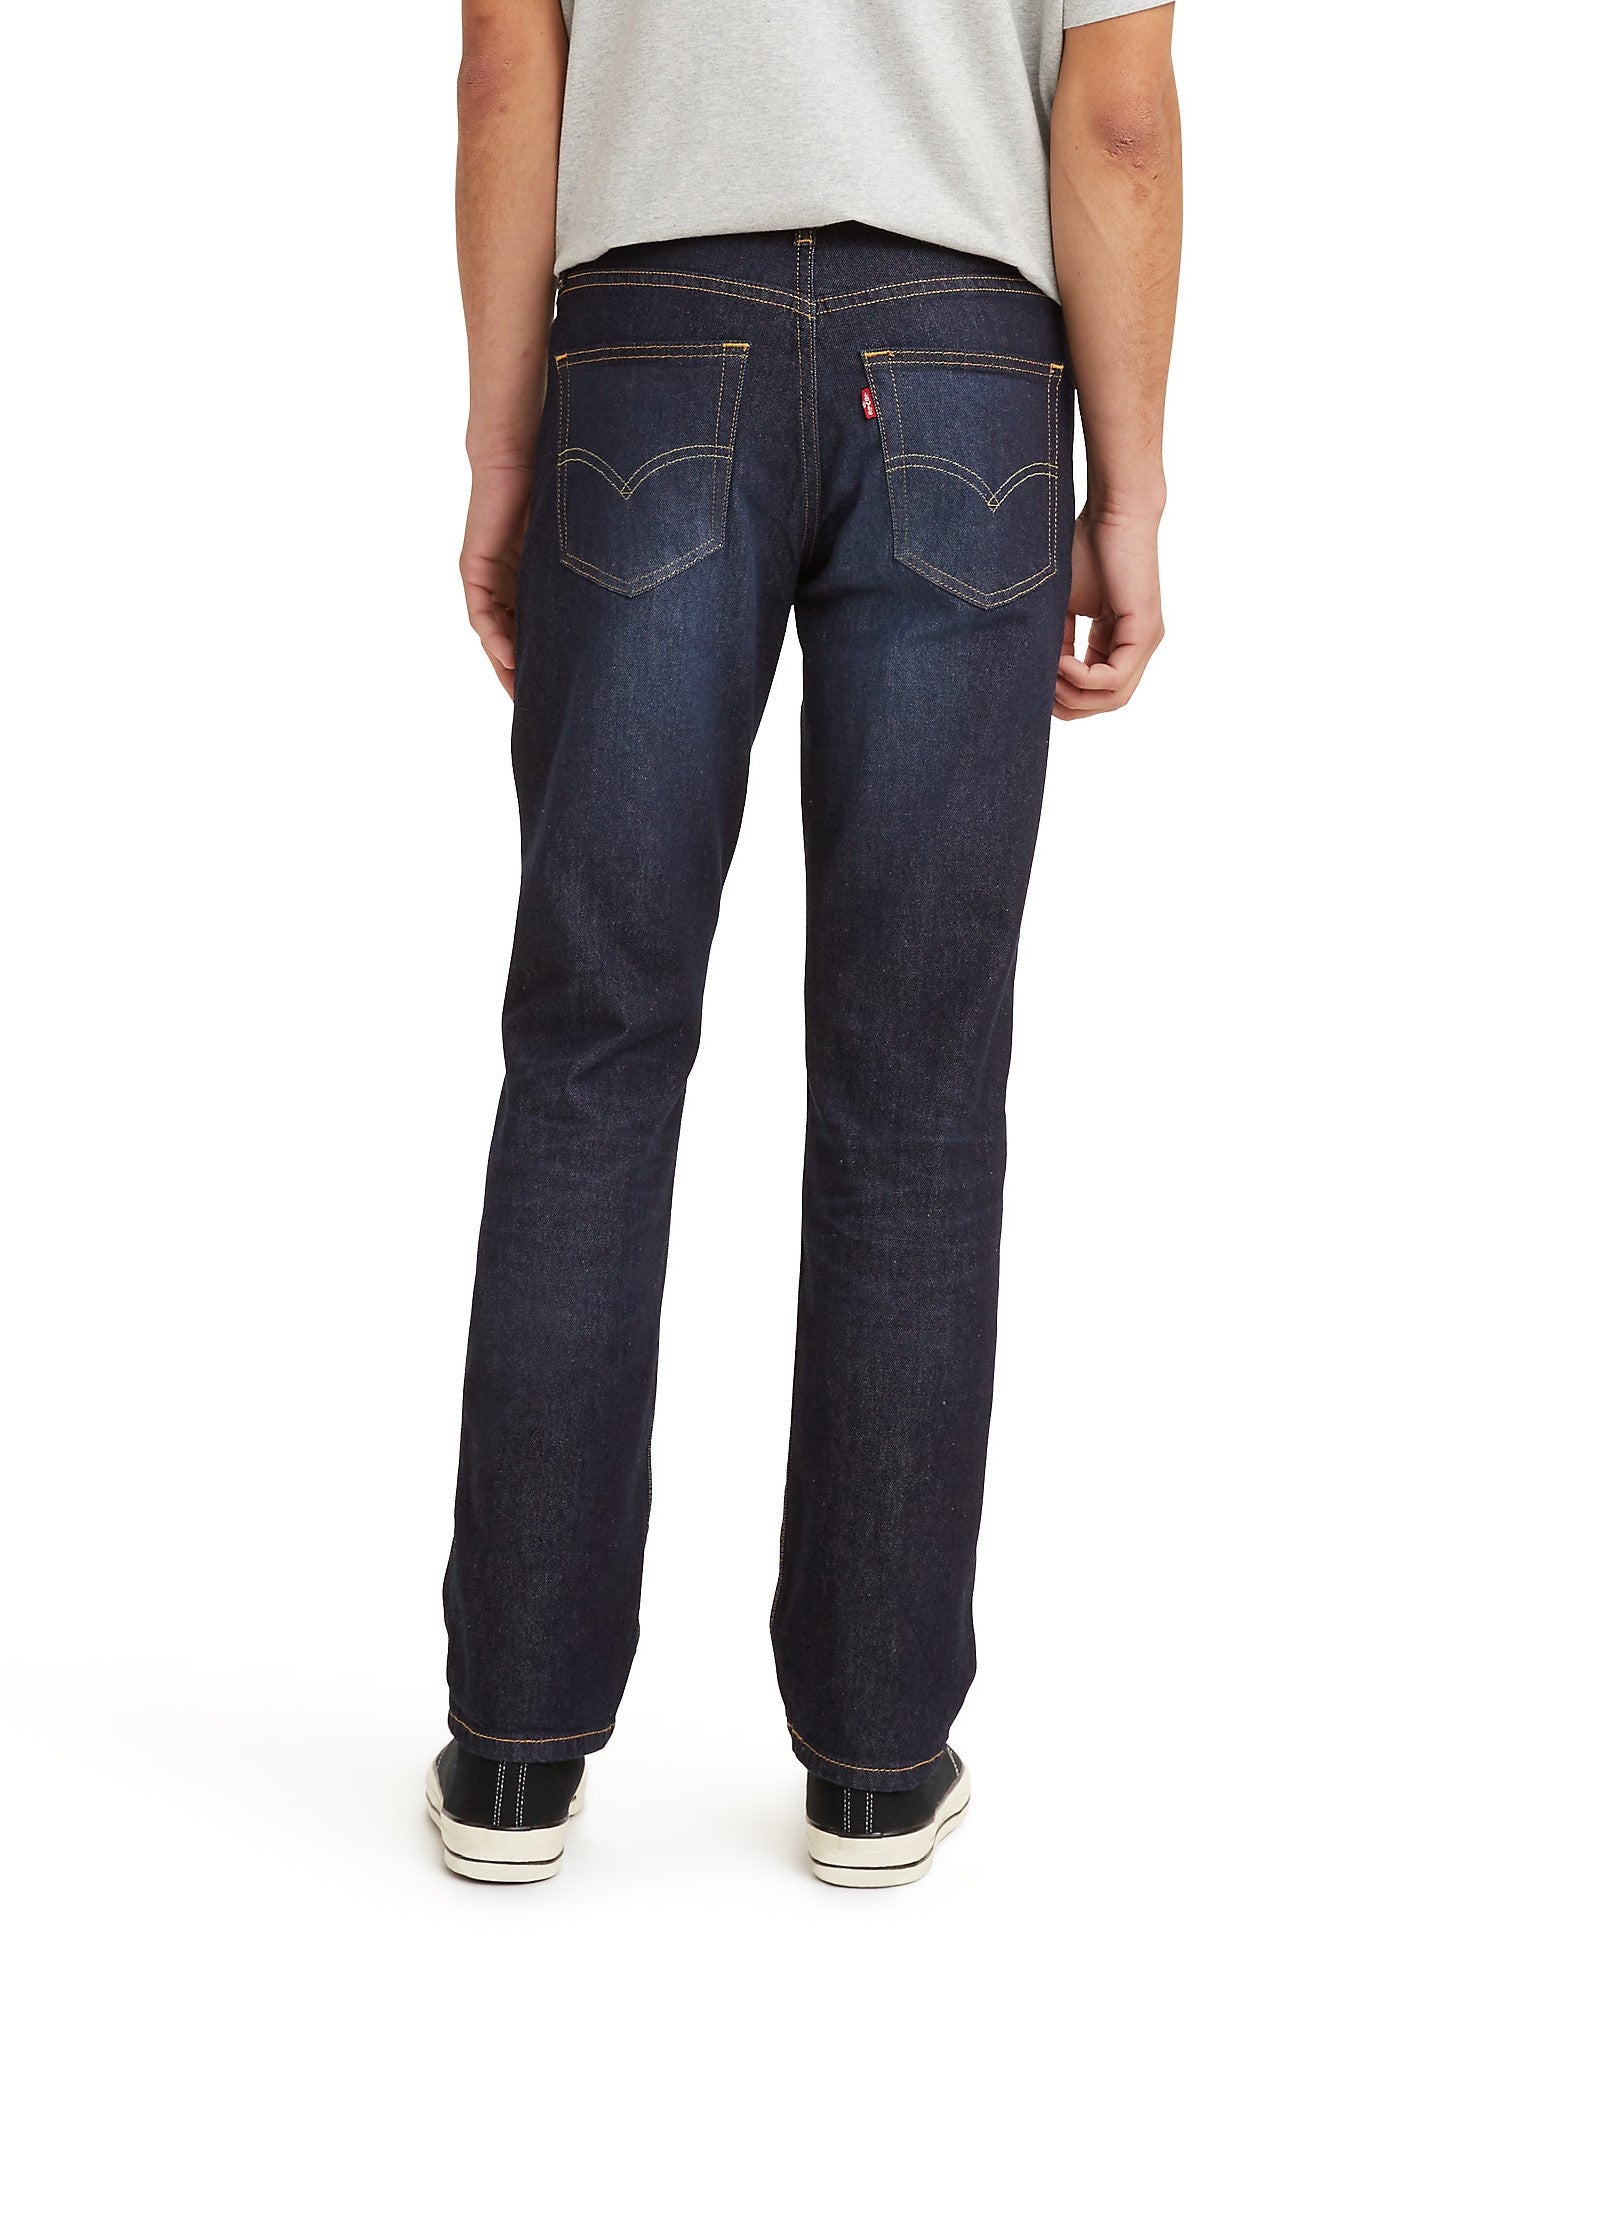 pantalones-jeans-levis-511-slim-p-caballeros